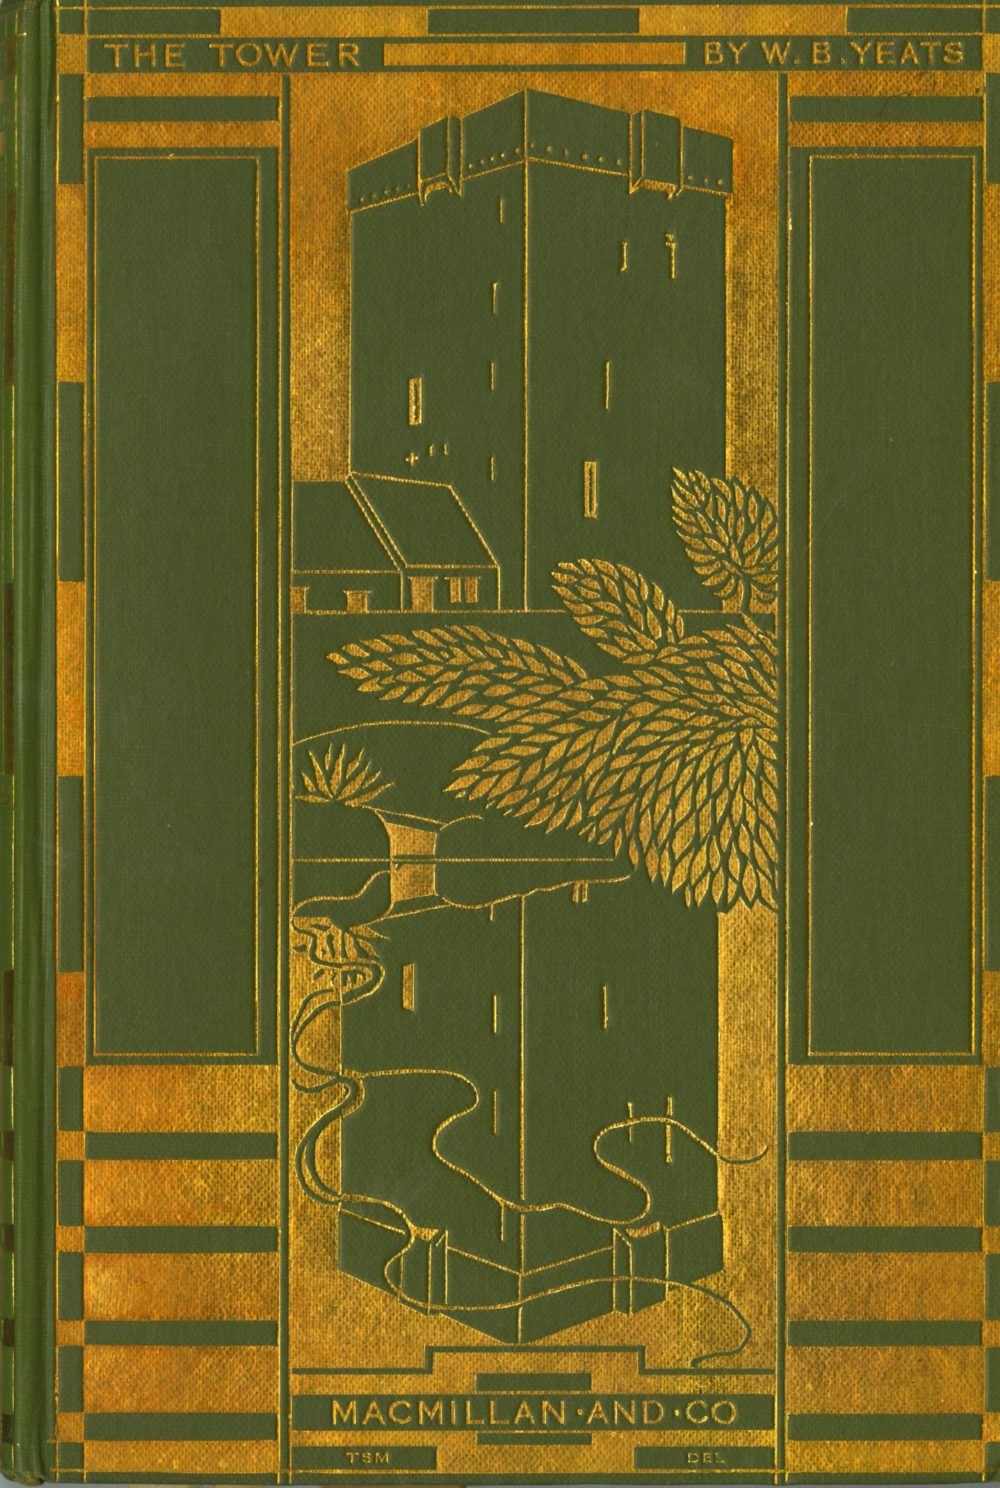 Yeats (W.B.) The Tower, 8vo L. (Mac Millan & Co.) 1928, First, gilt decor. pictorial cloth, d.j.